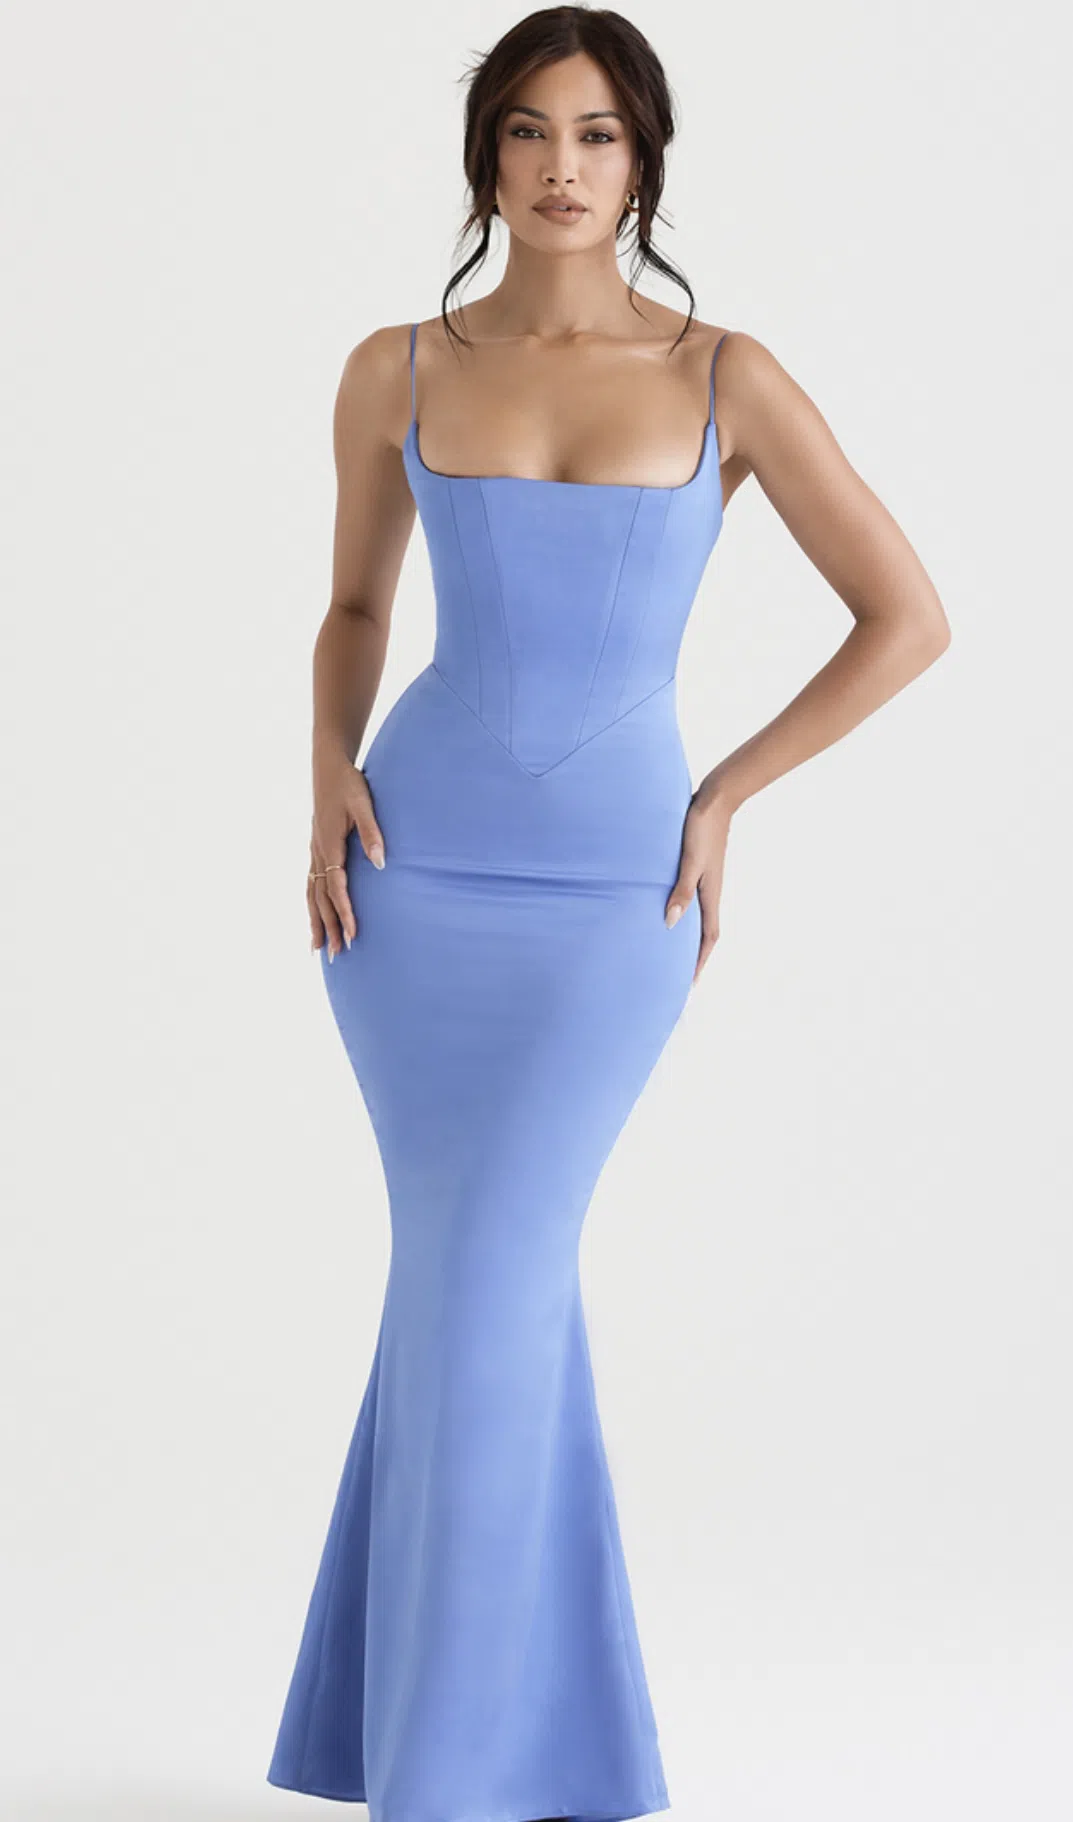 House Of CB Olivette Periwrinkle Satin Corest Maxi Dress Blue Size XS/AU 6